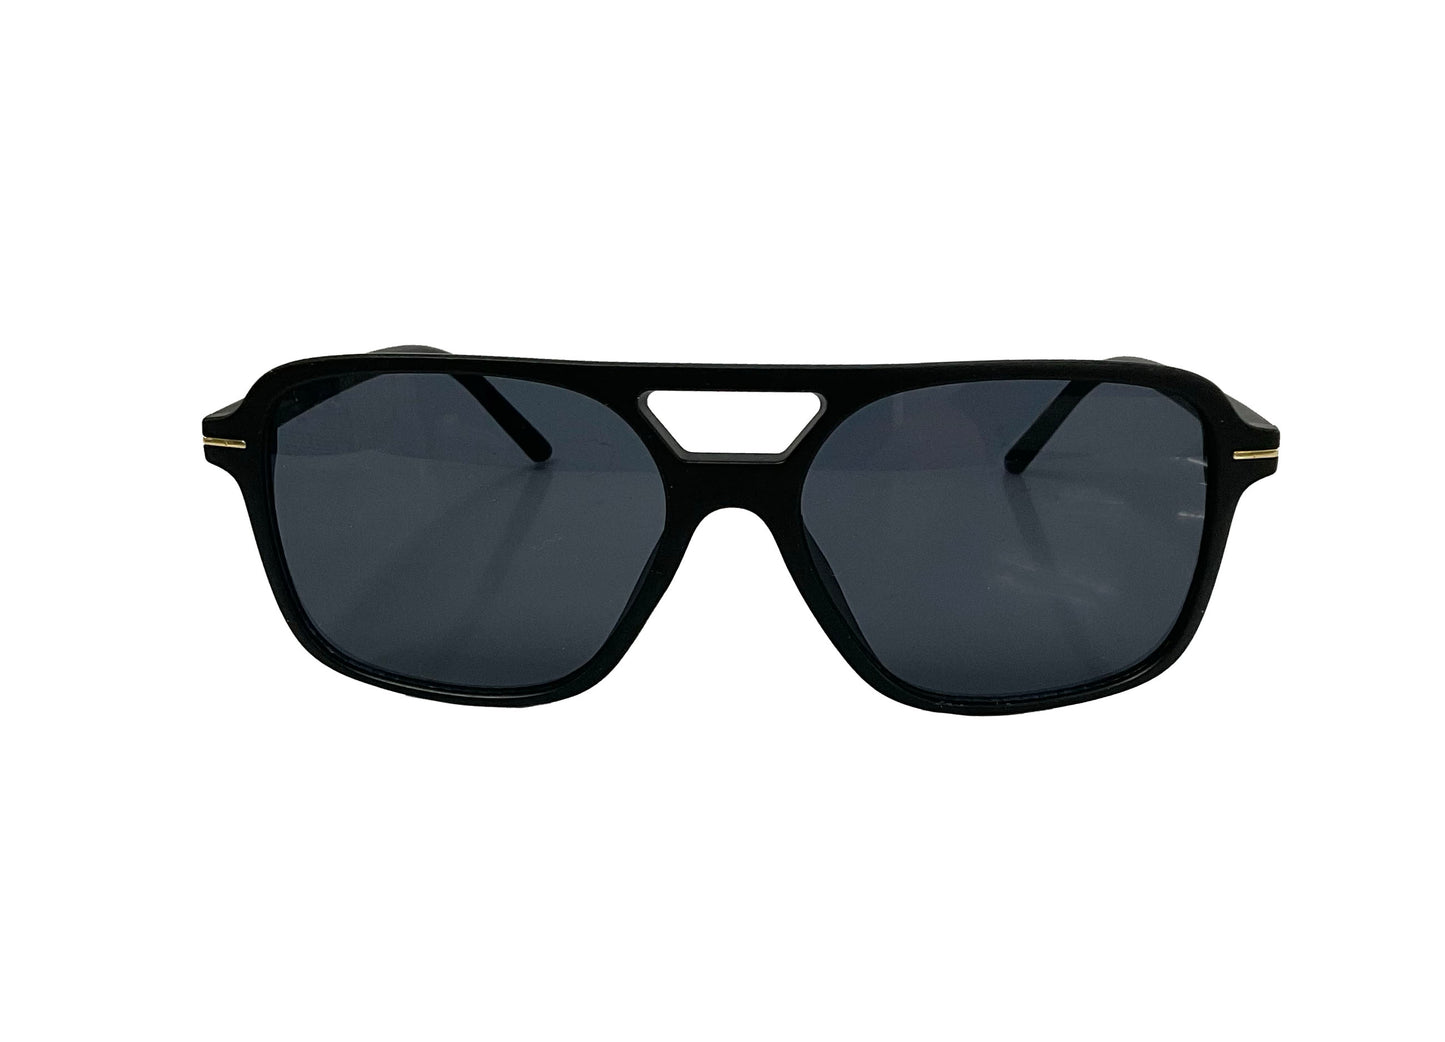 Sunglasses #62-89330